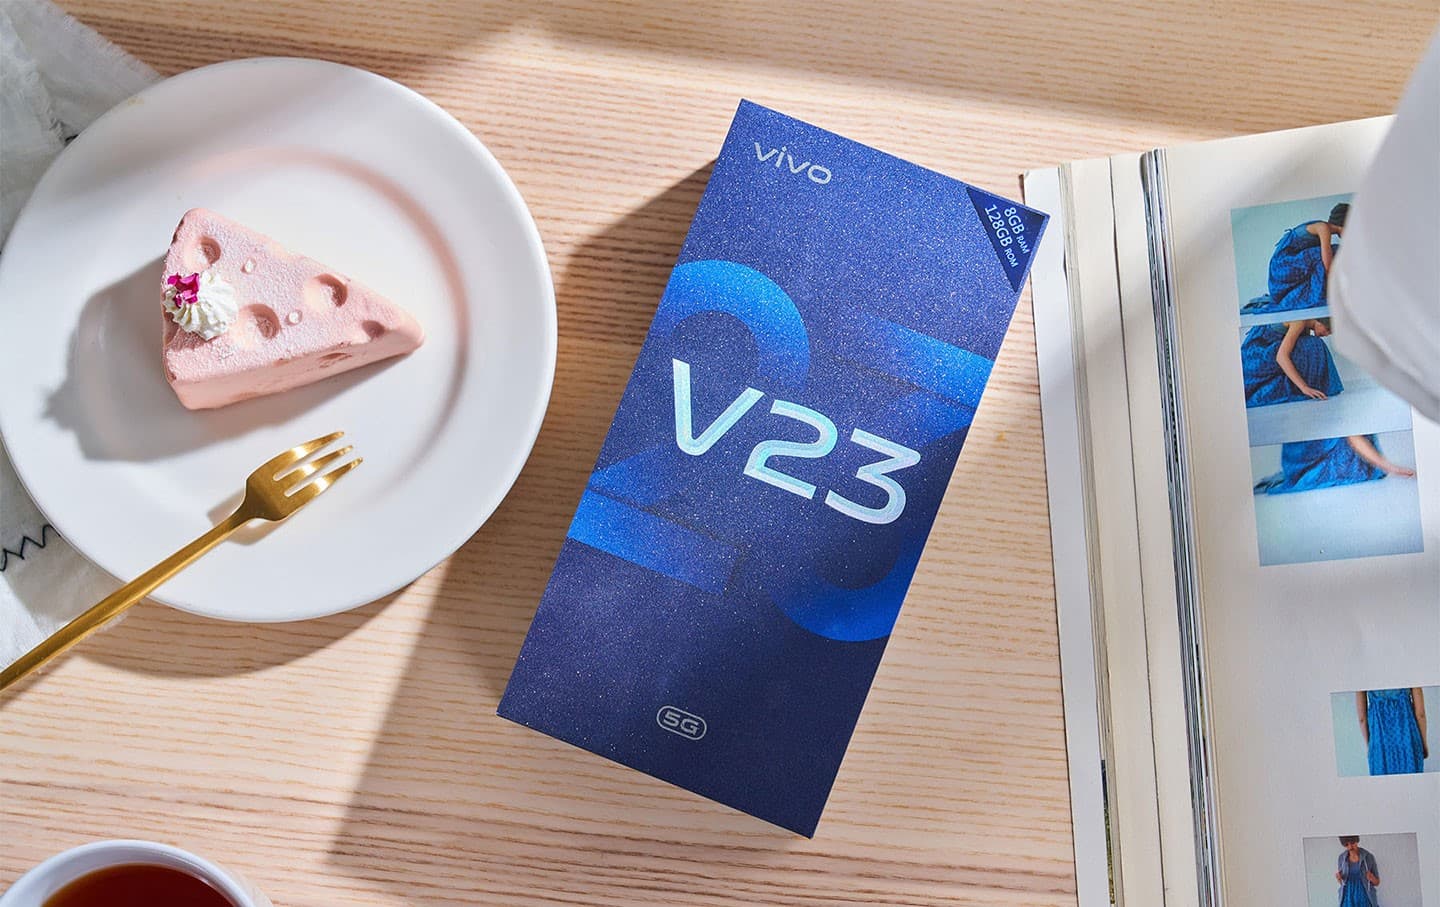 vivo V23 5G 的外盒帶有濃厚的夢幻色彩，雖然視覺計上以產品的型號為主，但特殊的印刷處理方面讓人印象深刻。